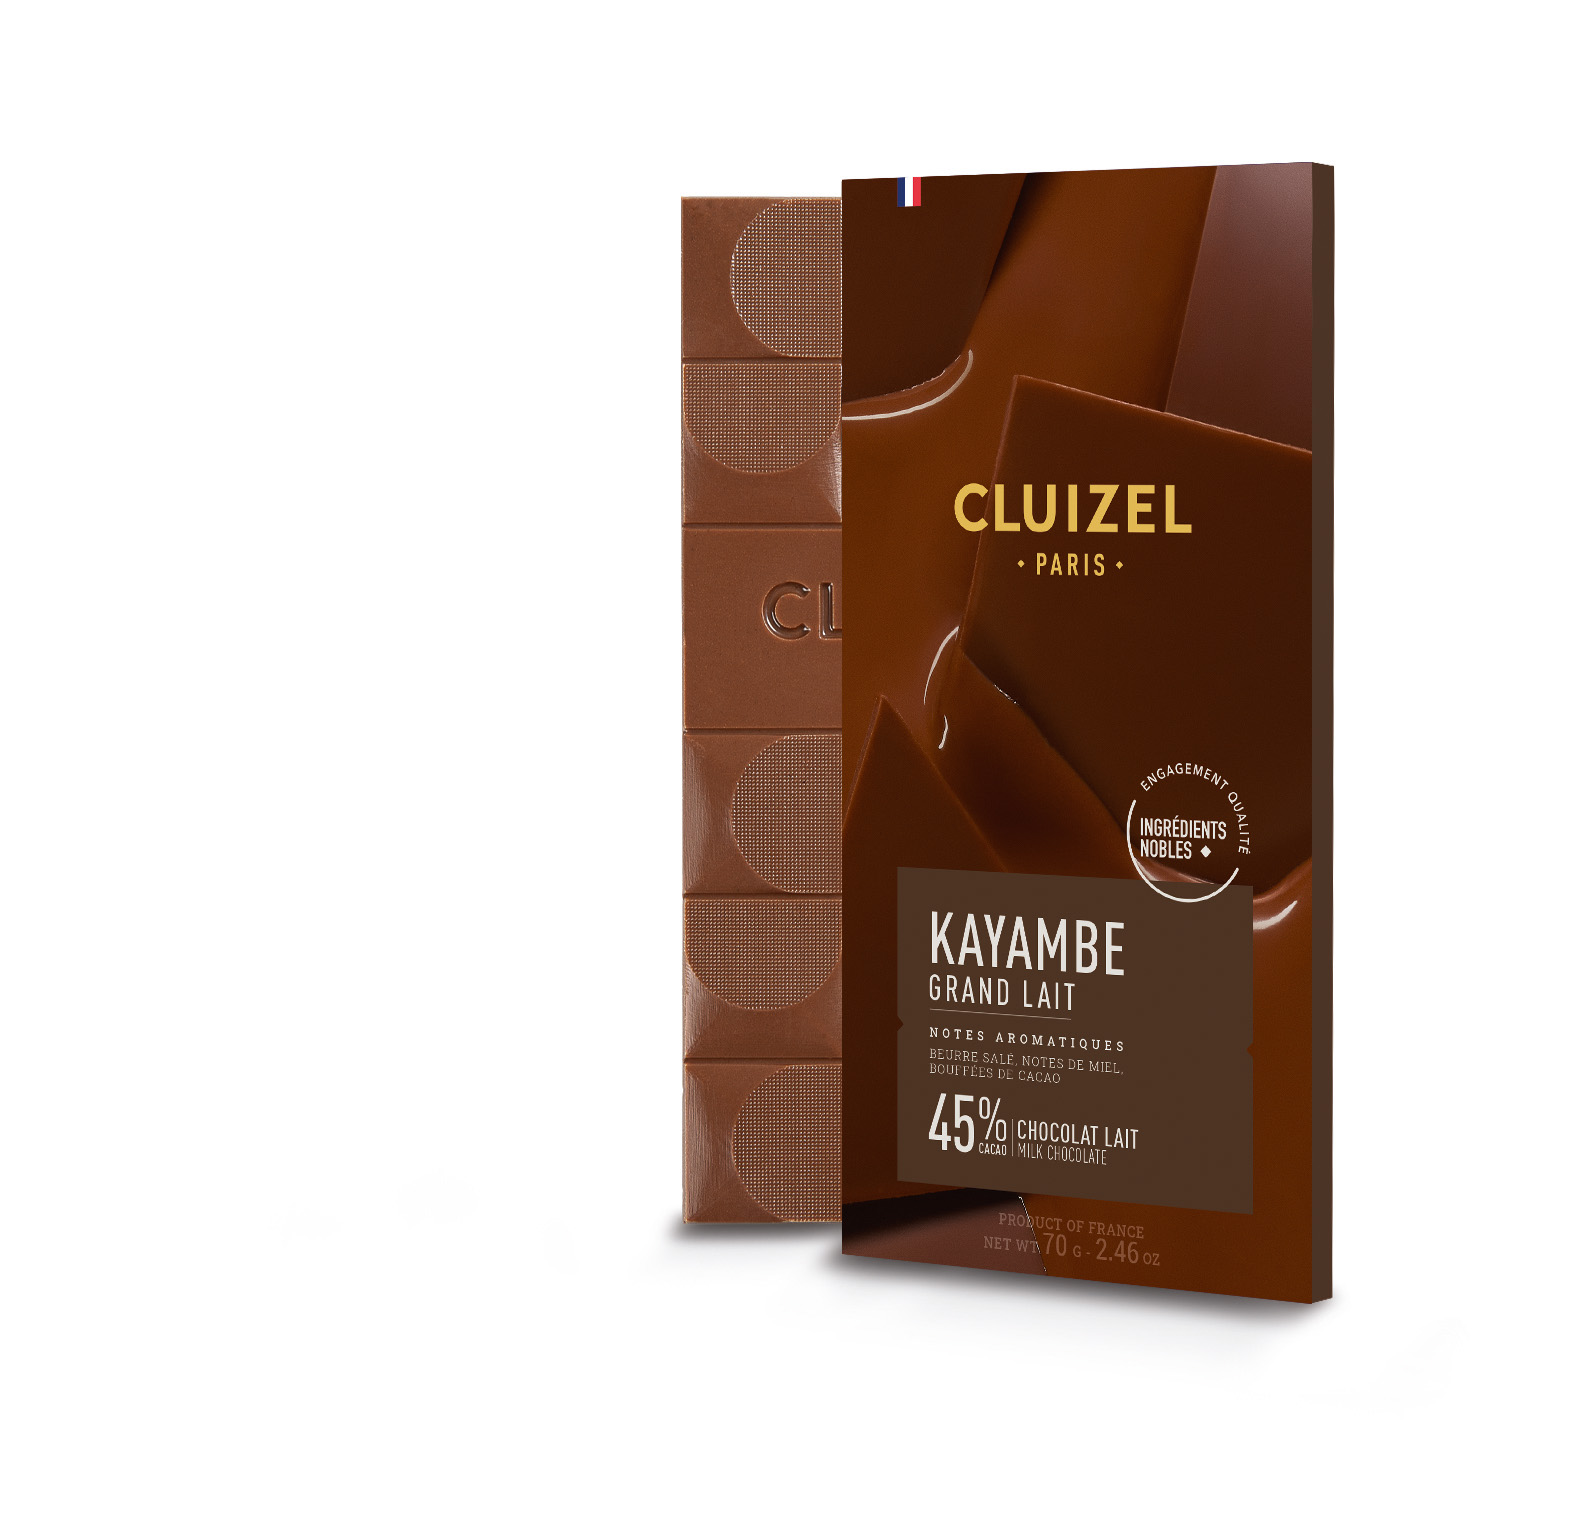 Michel Cluizel Kayambe Grand Lait 45% Milk Chocolate Bar